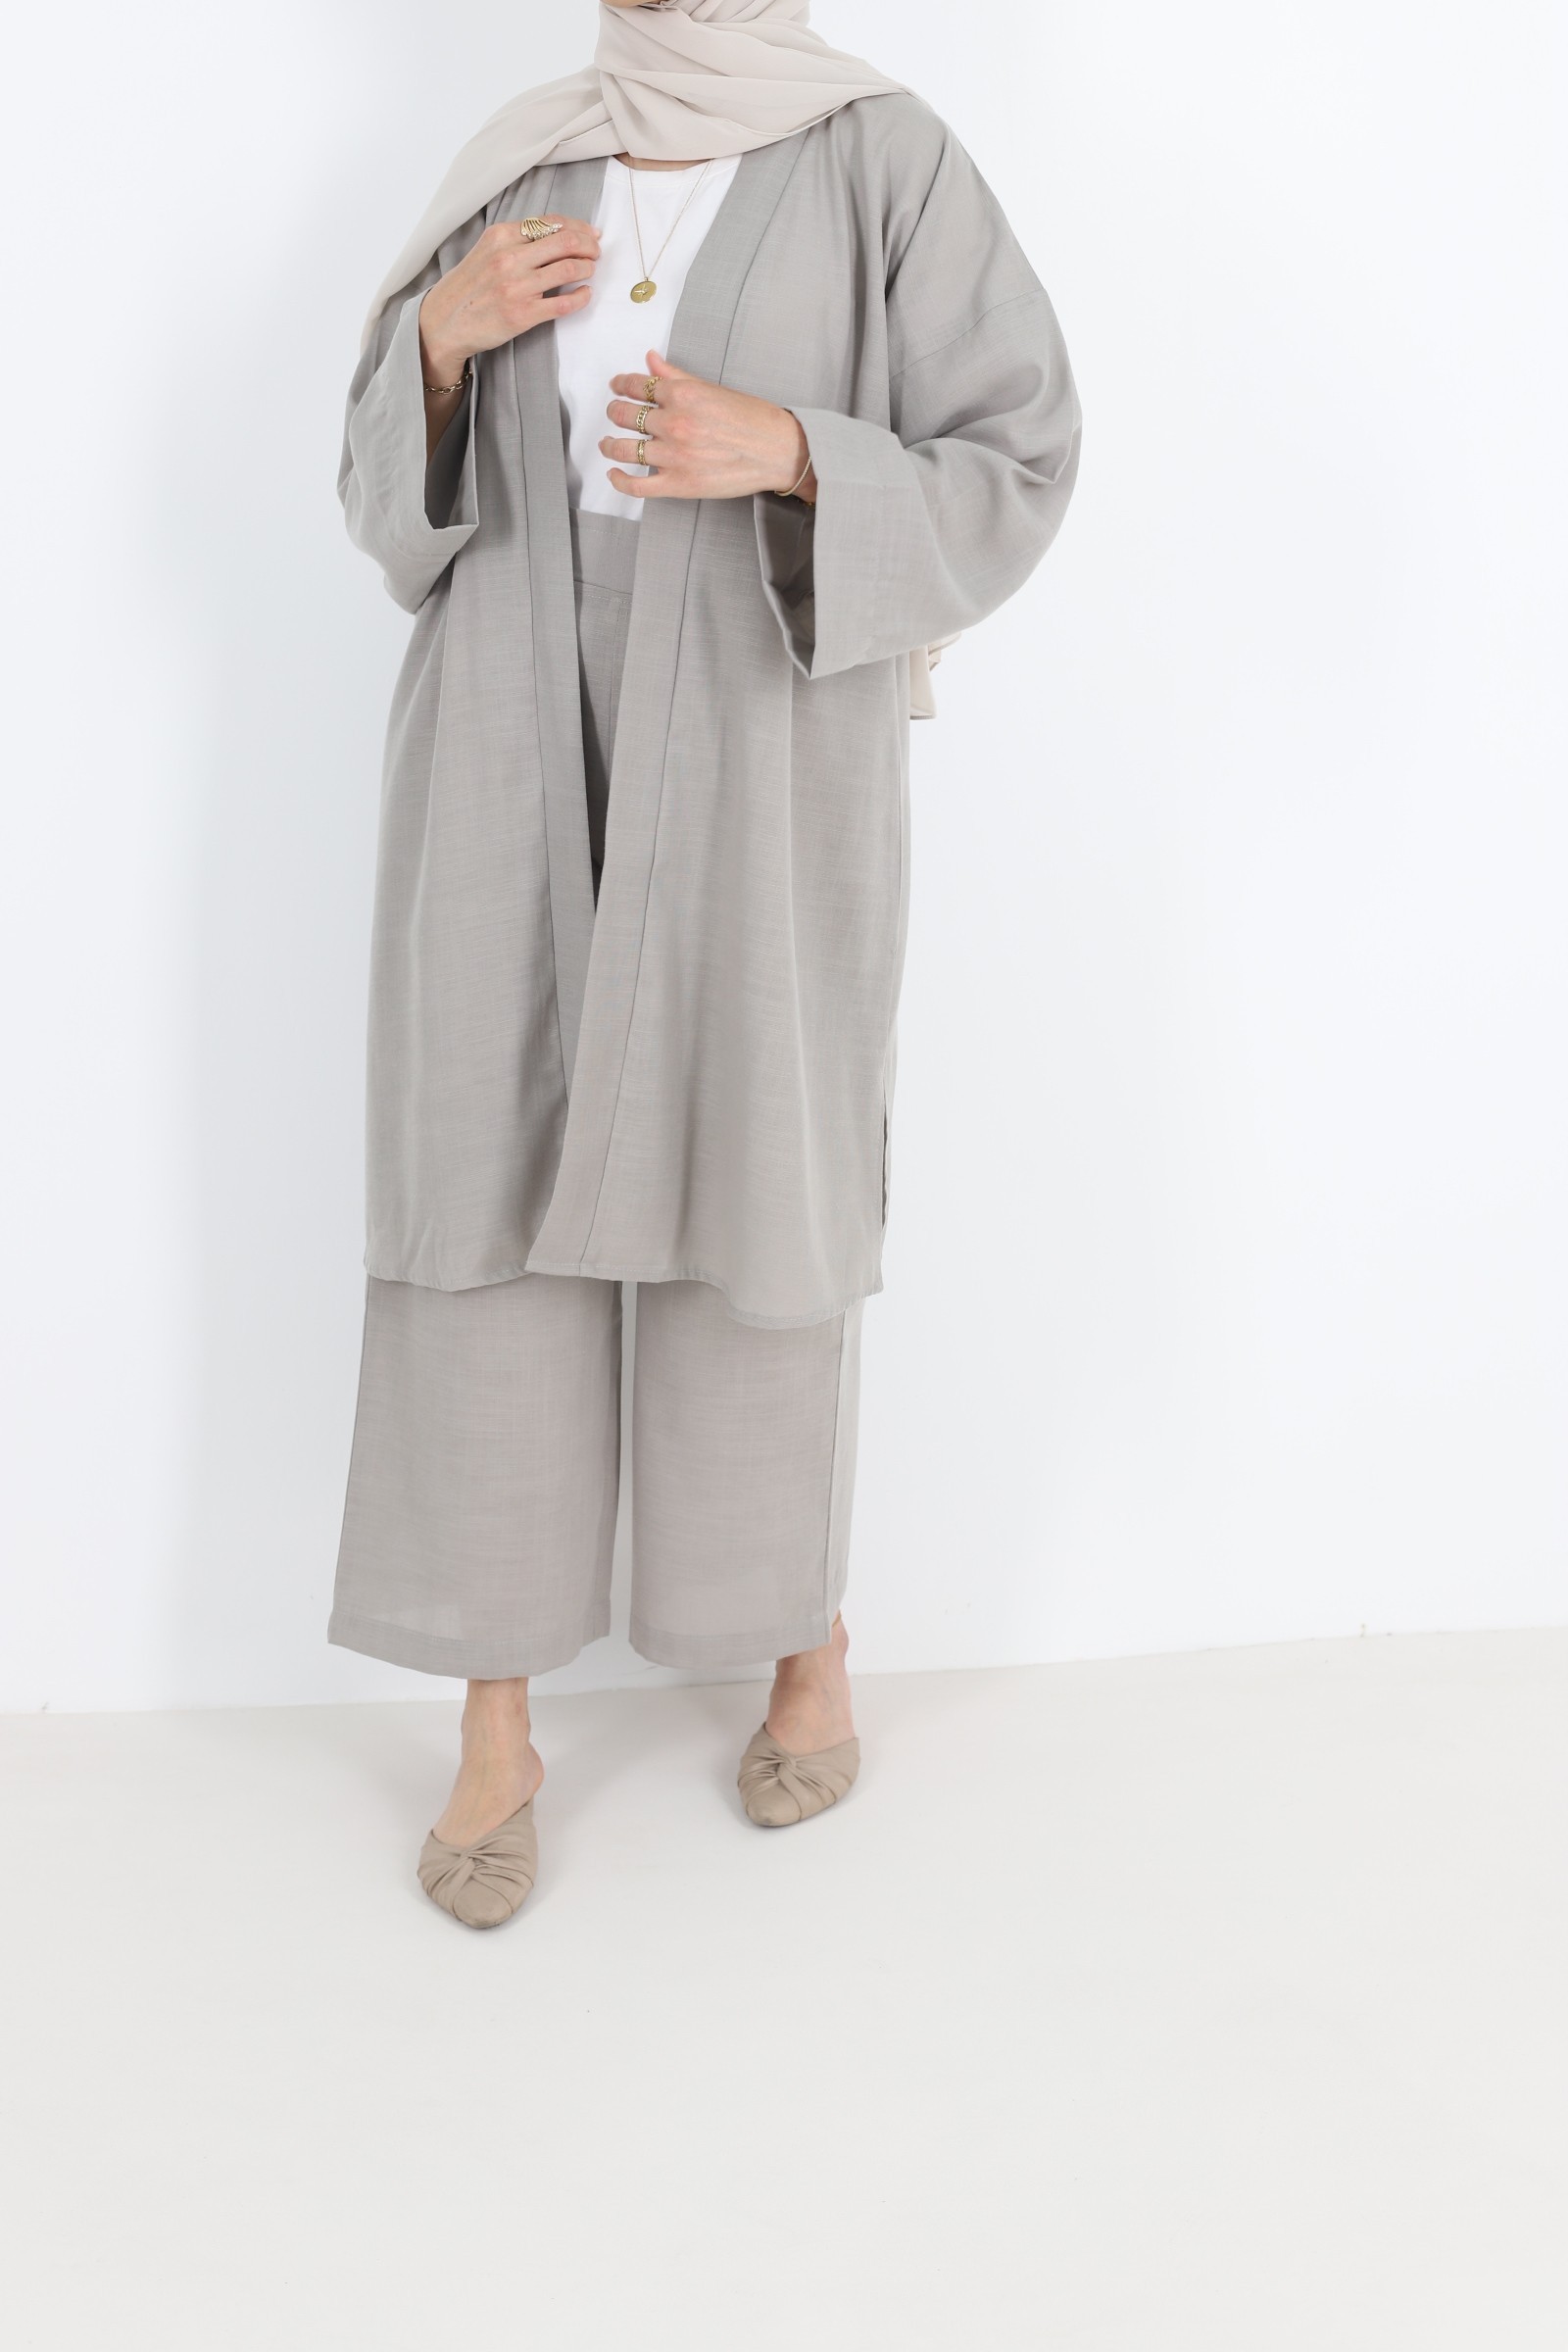 Ensemble pantalon et kimono en lin tenue d'été pour femme musulmane 